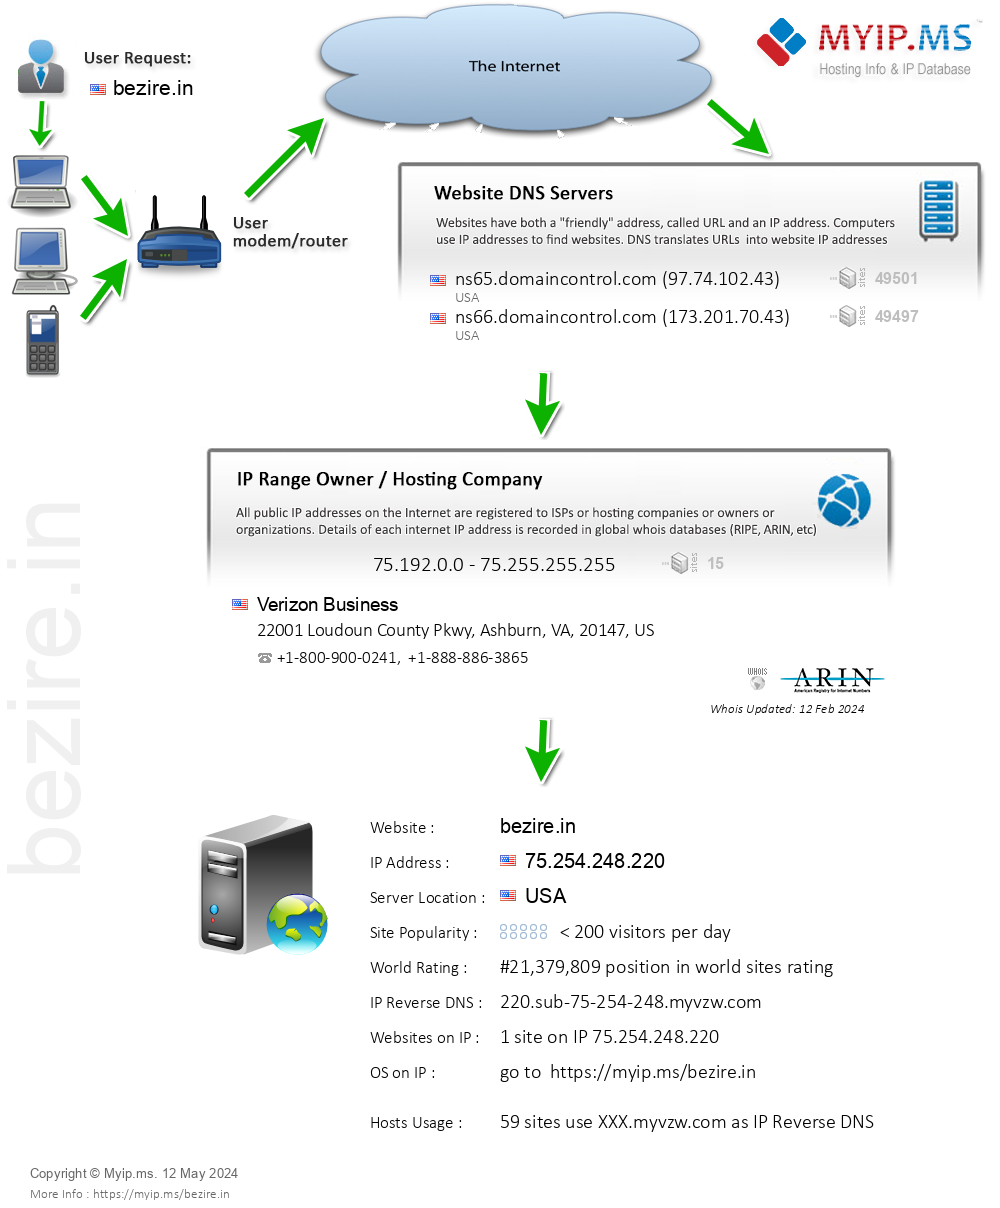 Bezire.in - Website Hosting Visual IP Diagram